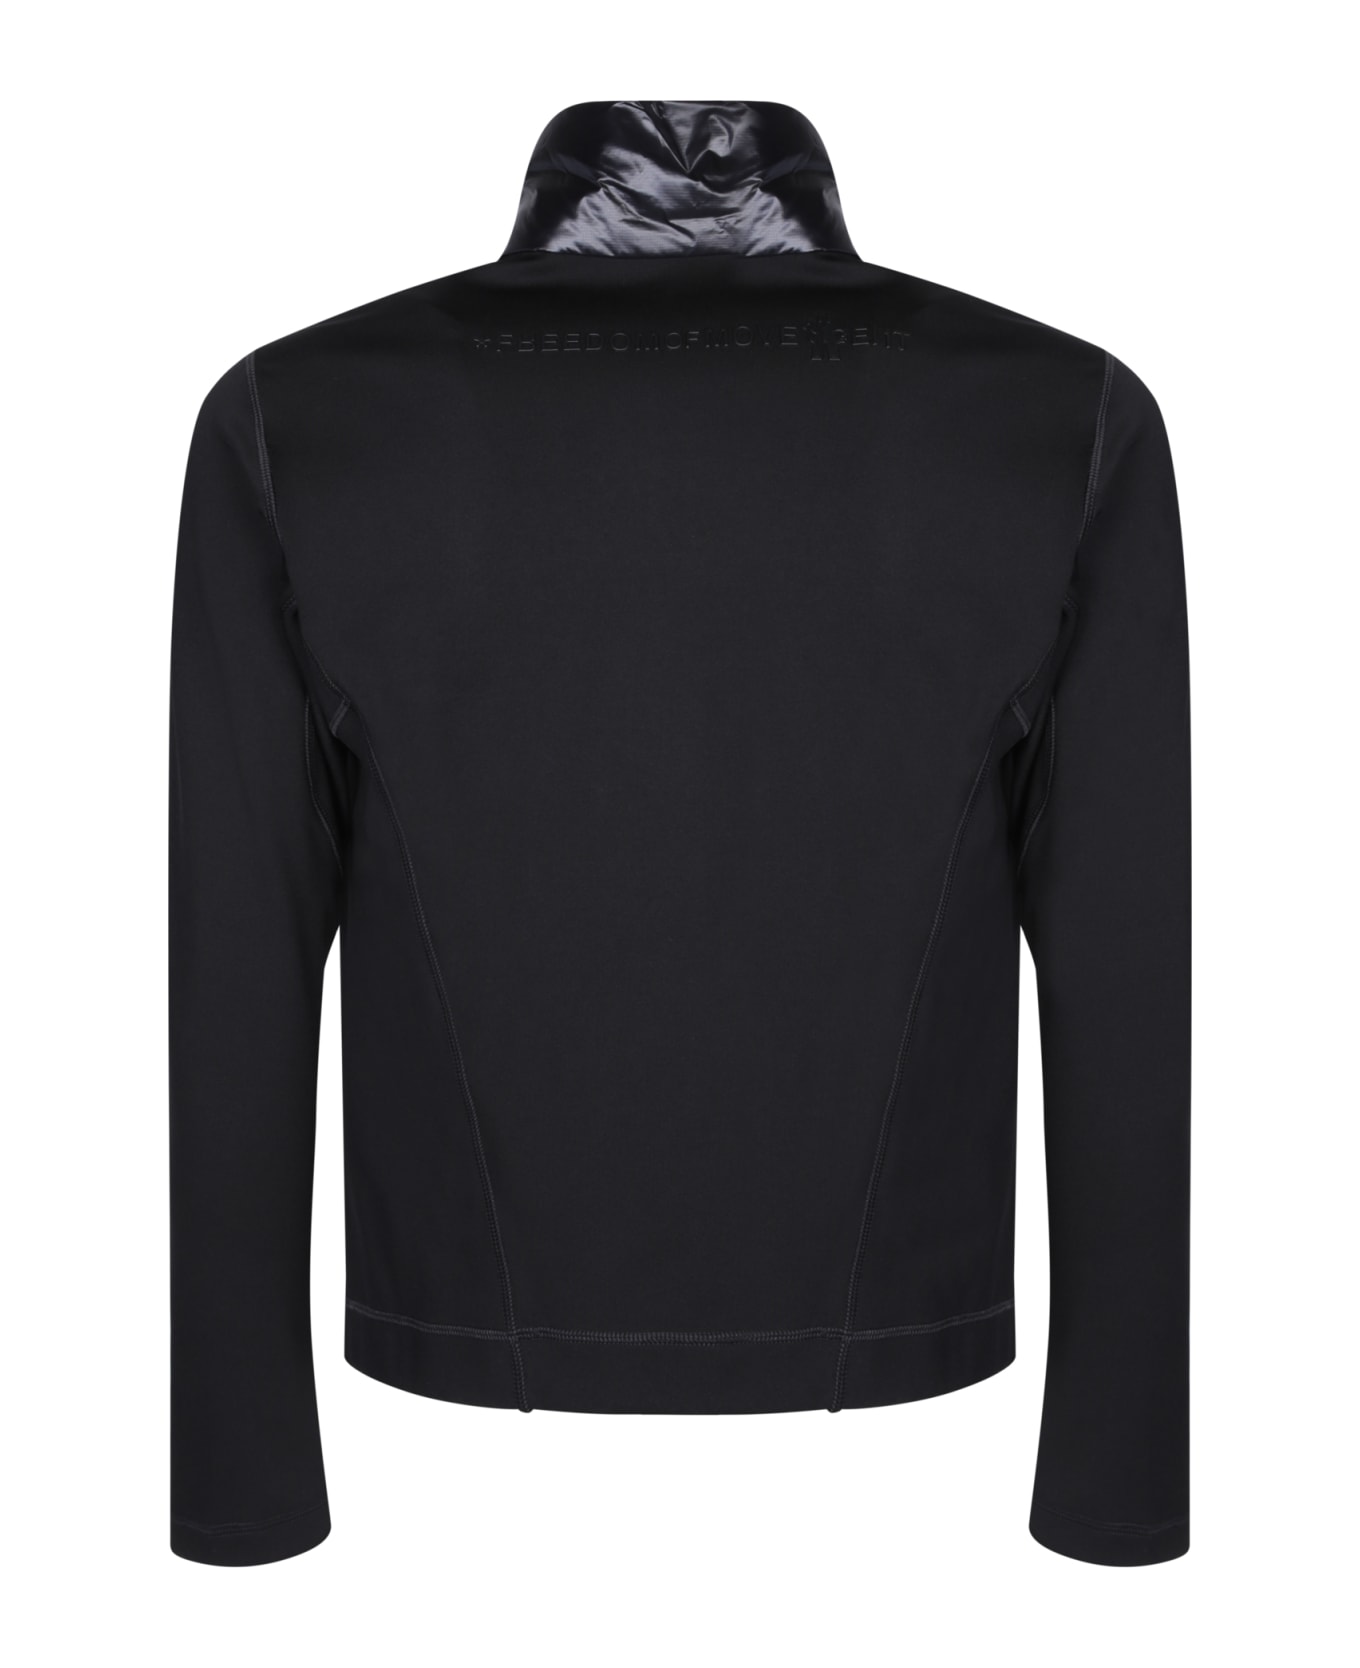 Moncler Grenoble Logo Jacket - Black ダウンジャケット